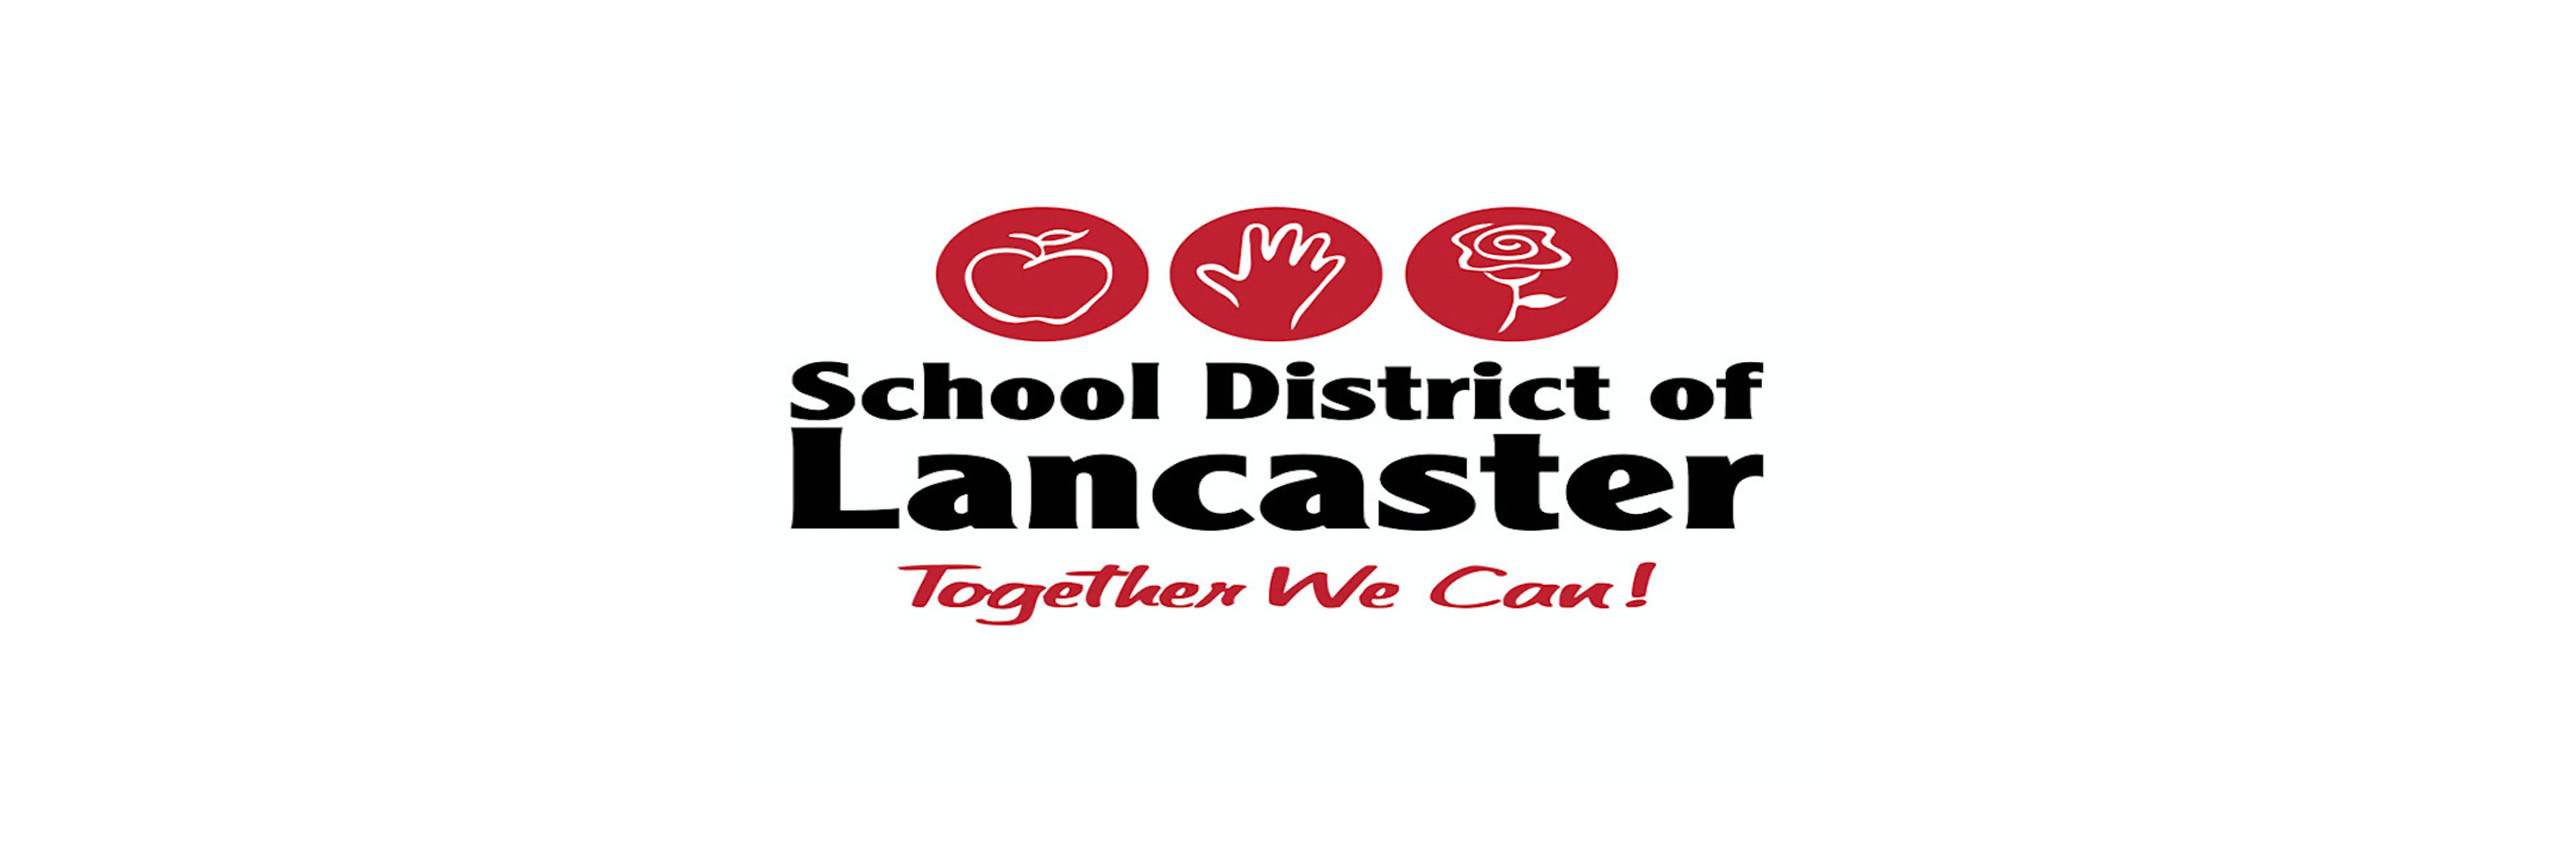 School District of Lancaster